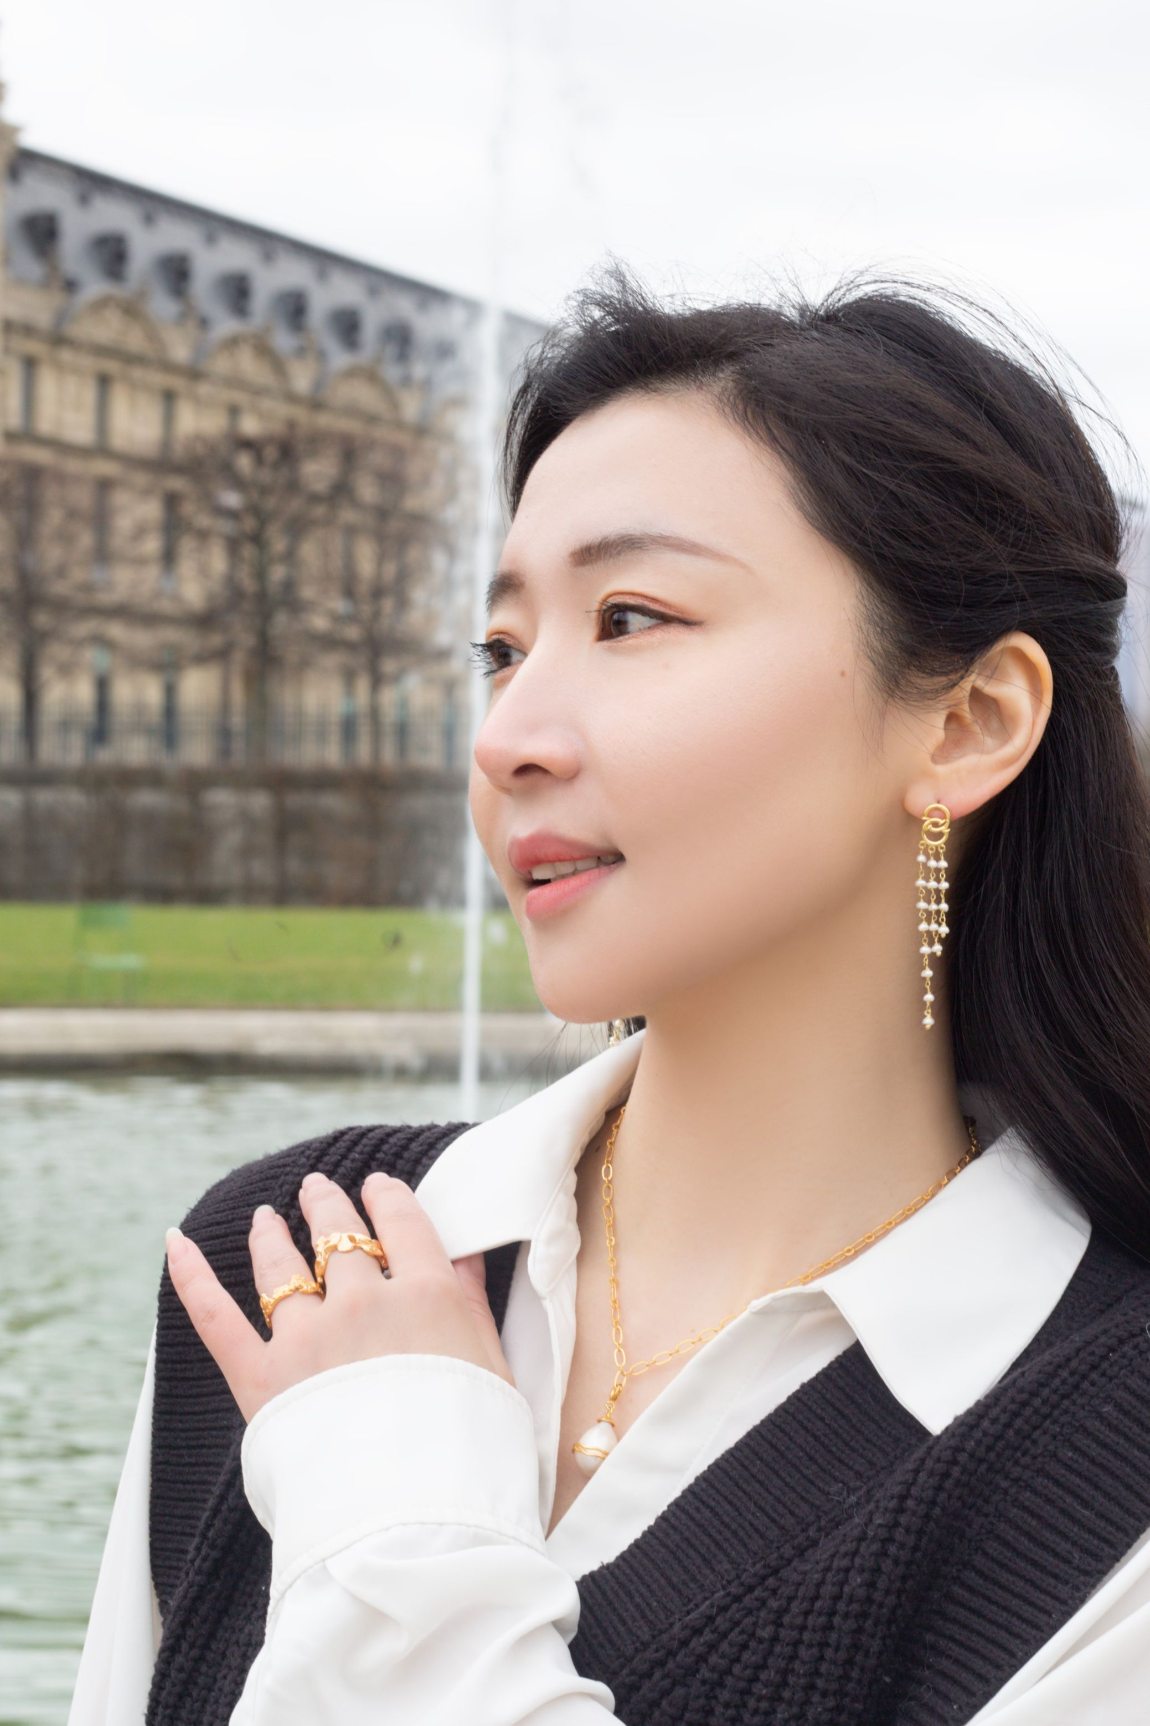 La Meduse Organic Pearl Dangle Earrings Mamour Paris Jewelry 